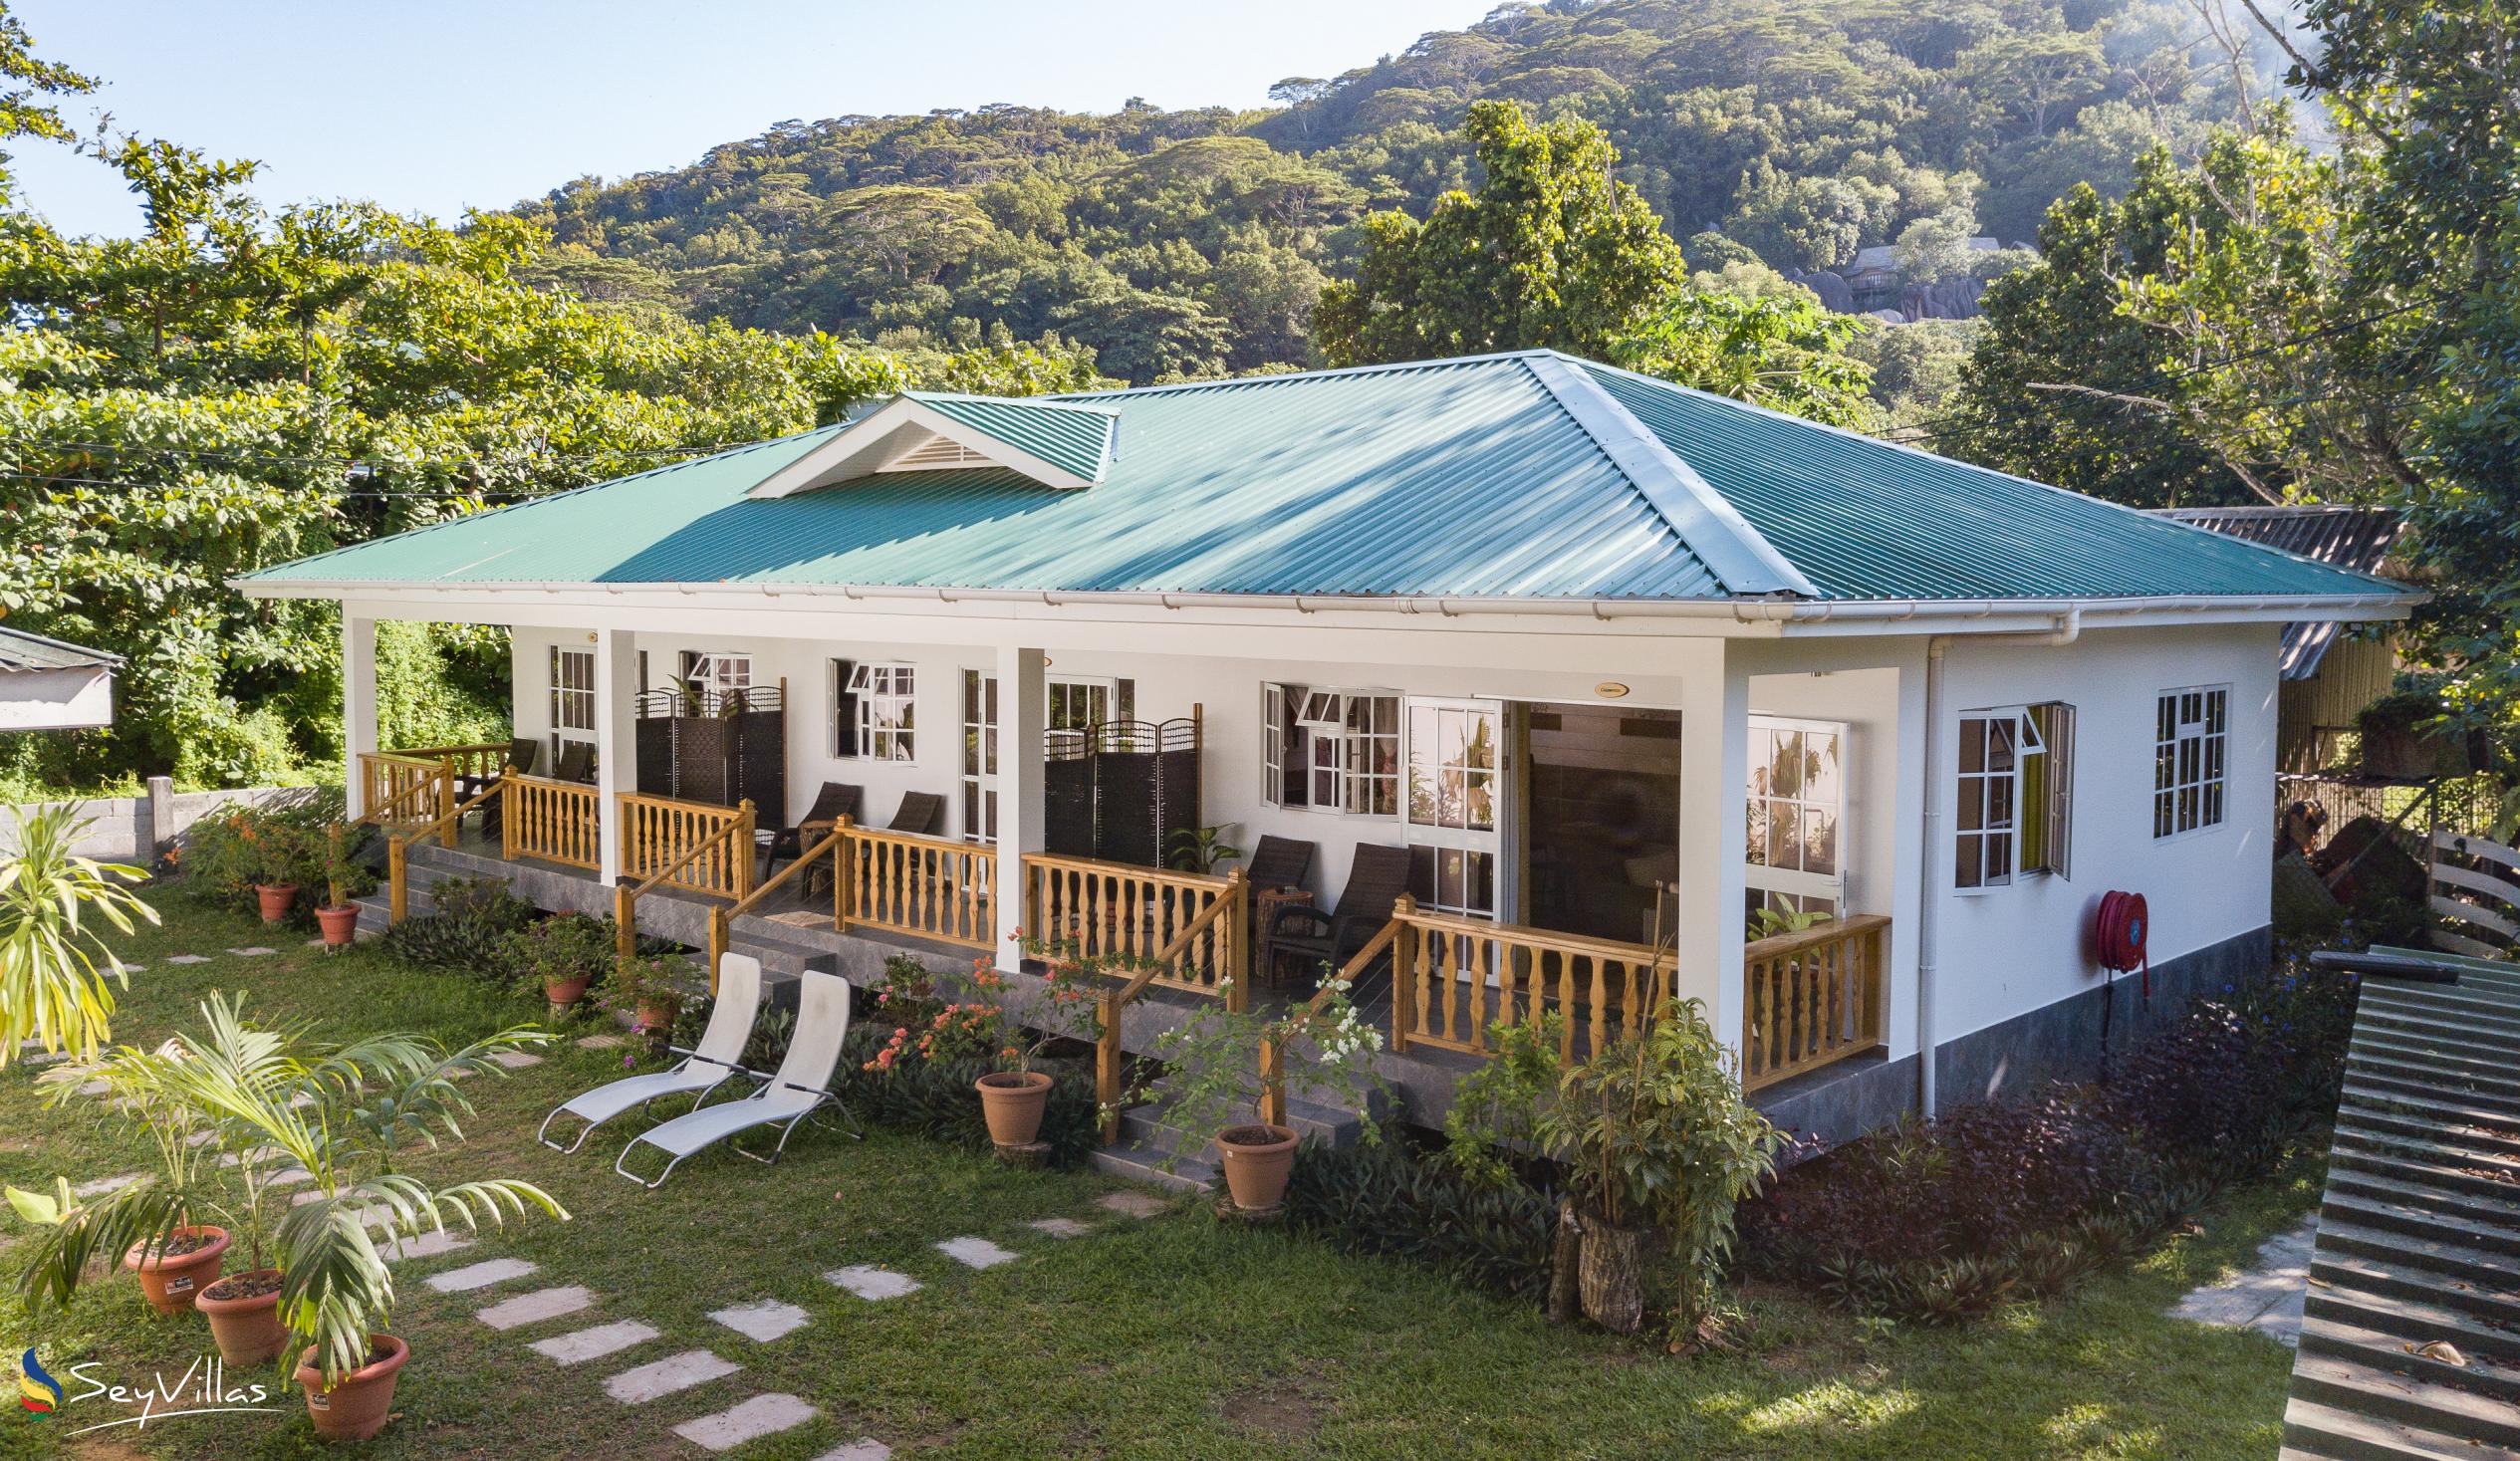 Photo 1: Villa Charette - Outdoor area - La Digue (Seychelles)